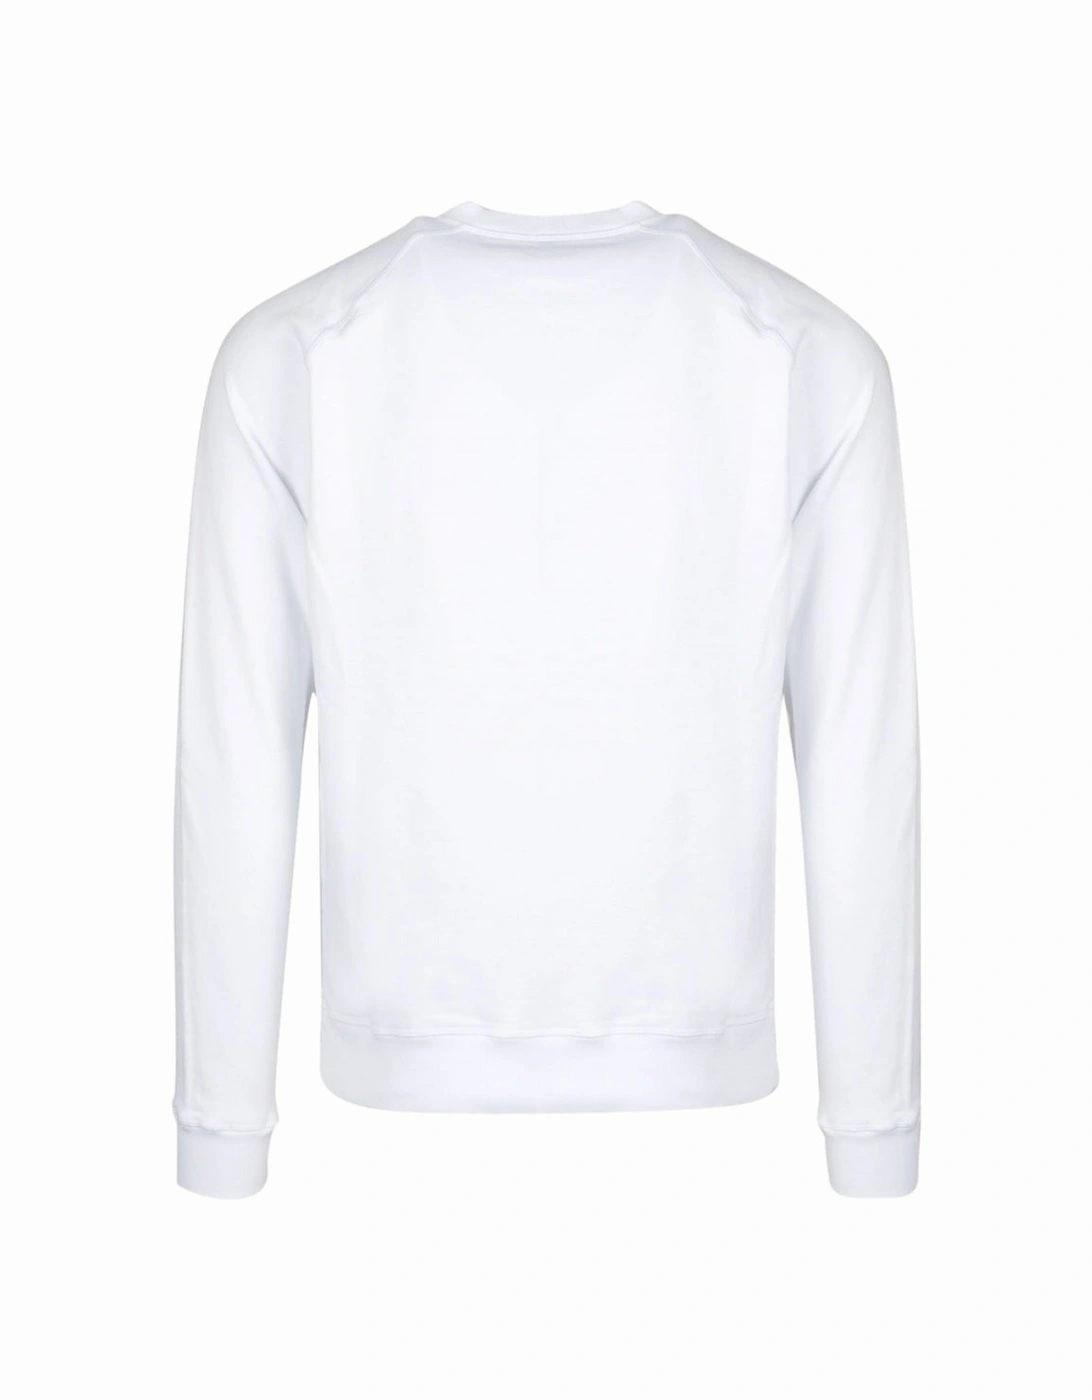 Classic Raglan Fit Logo White Sweater